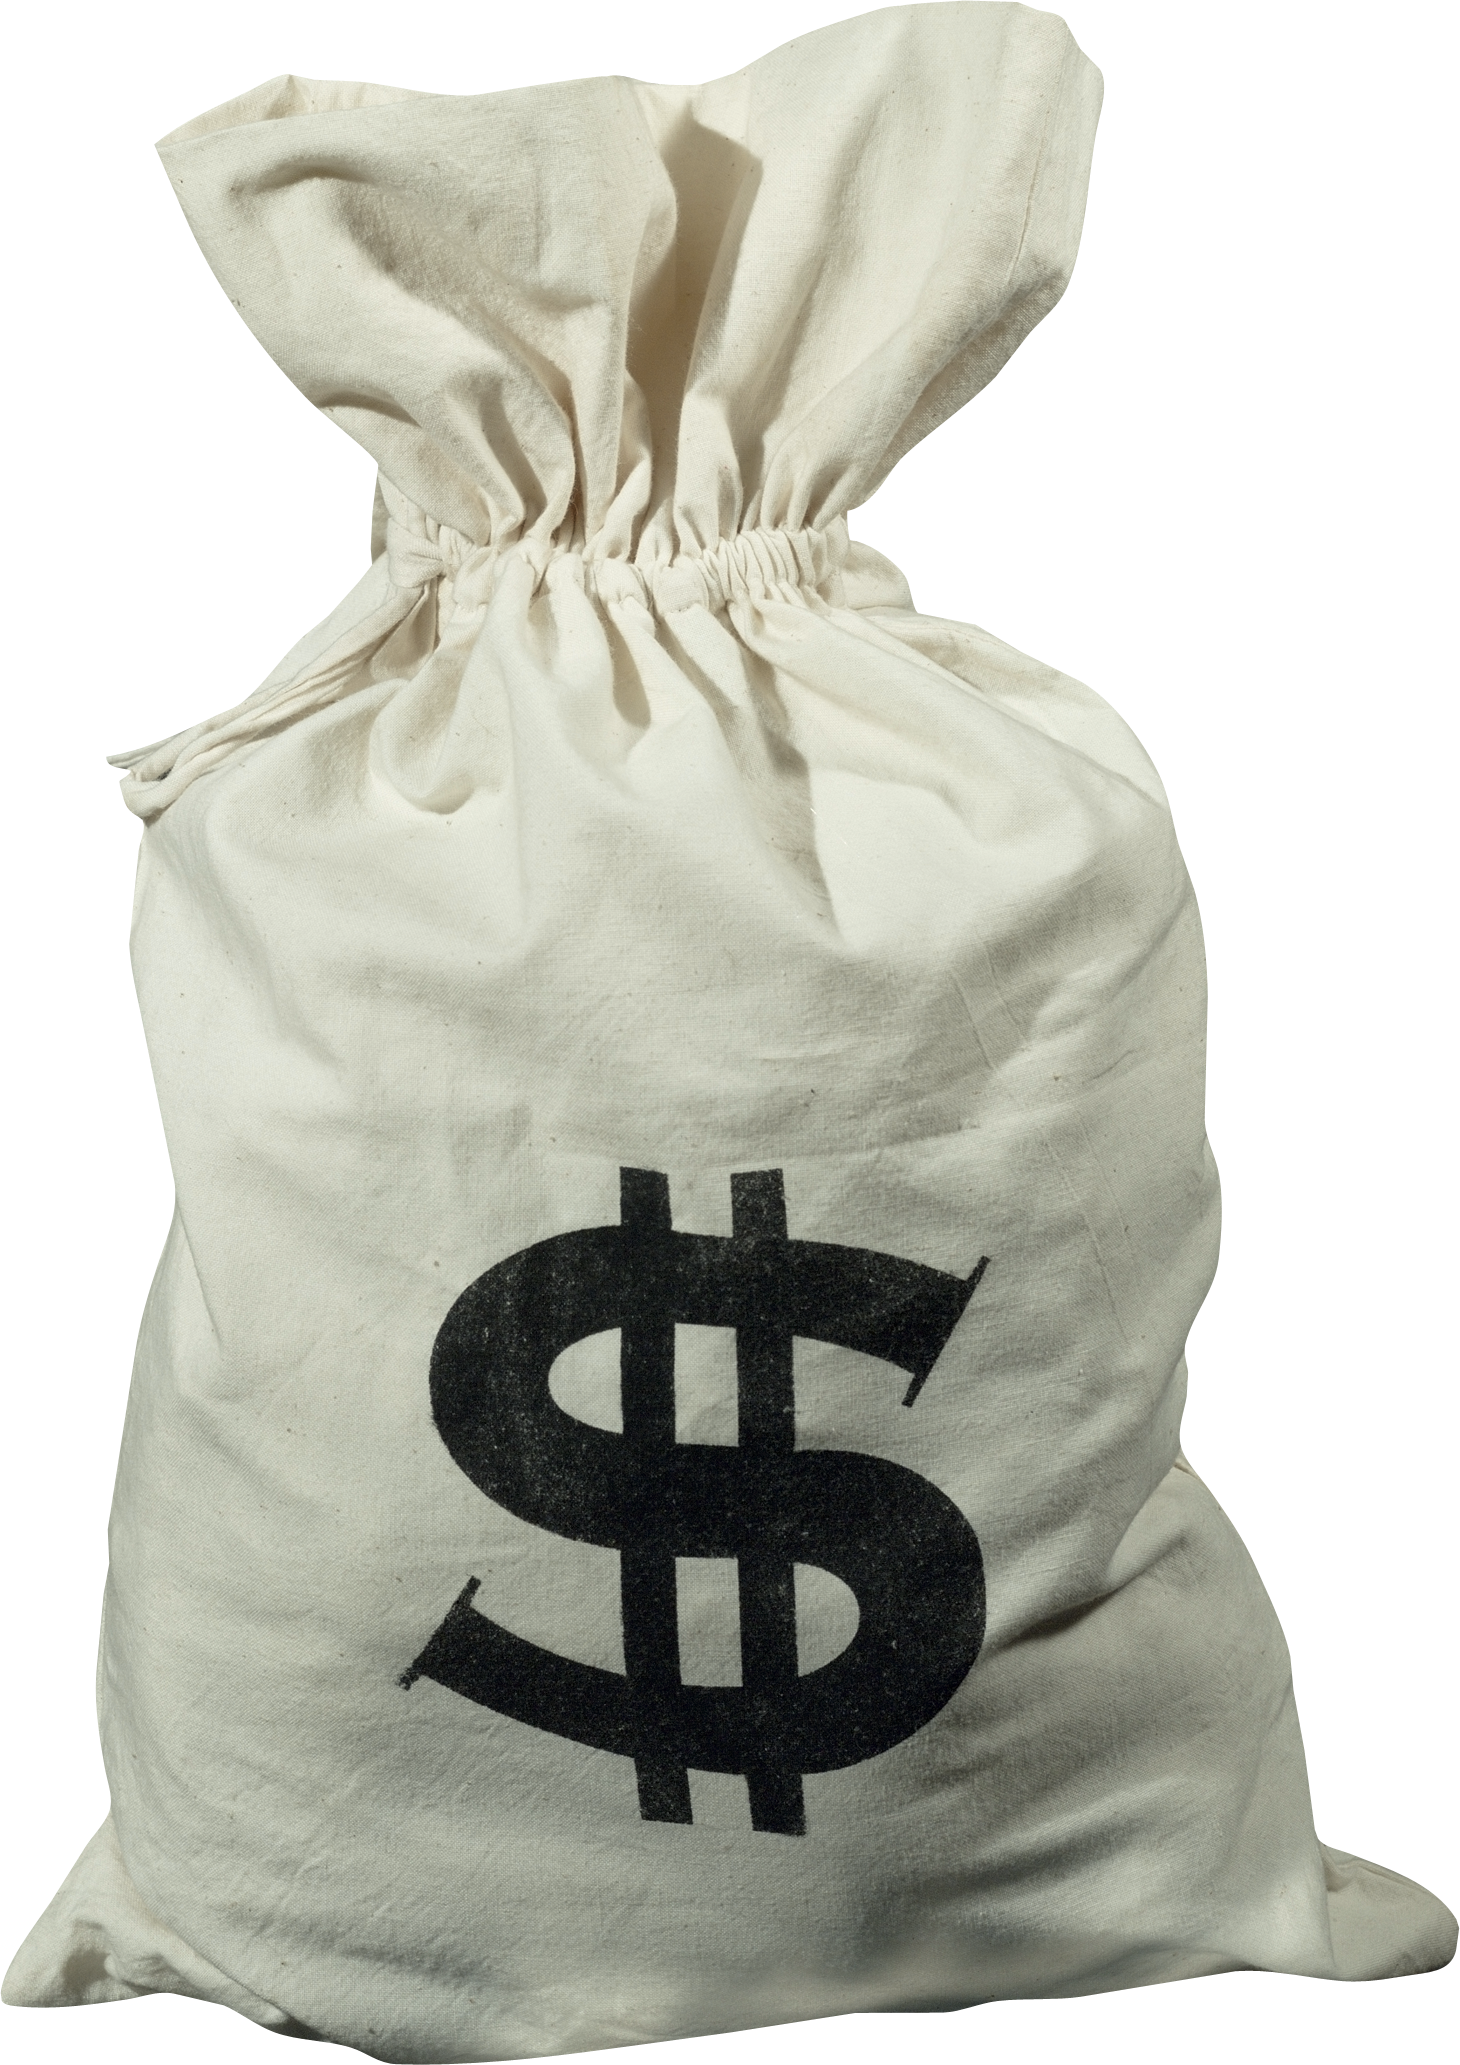 Money Bag PNG Image for Free Download